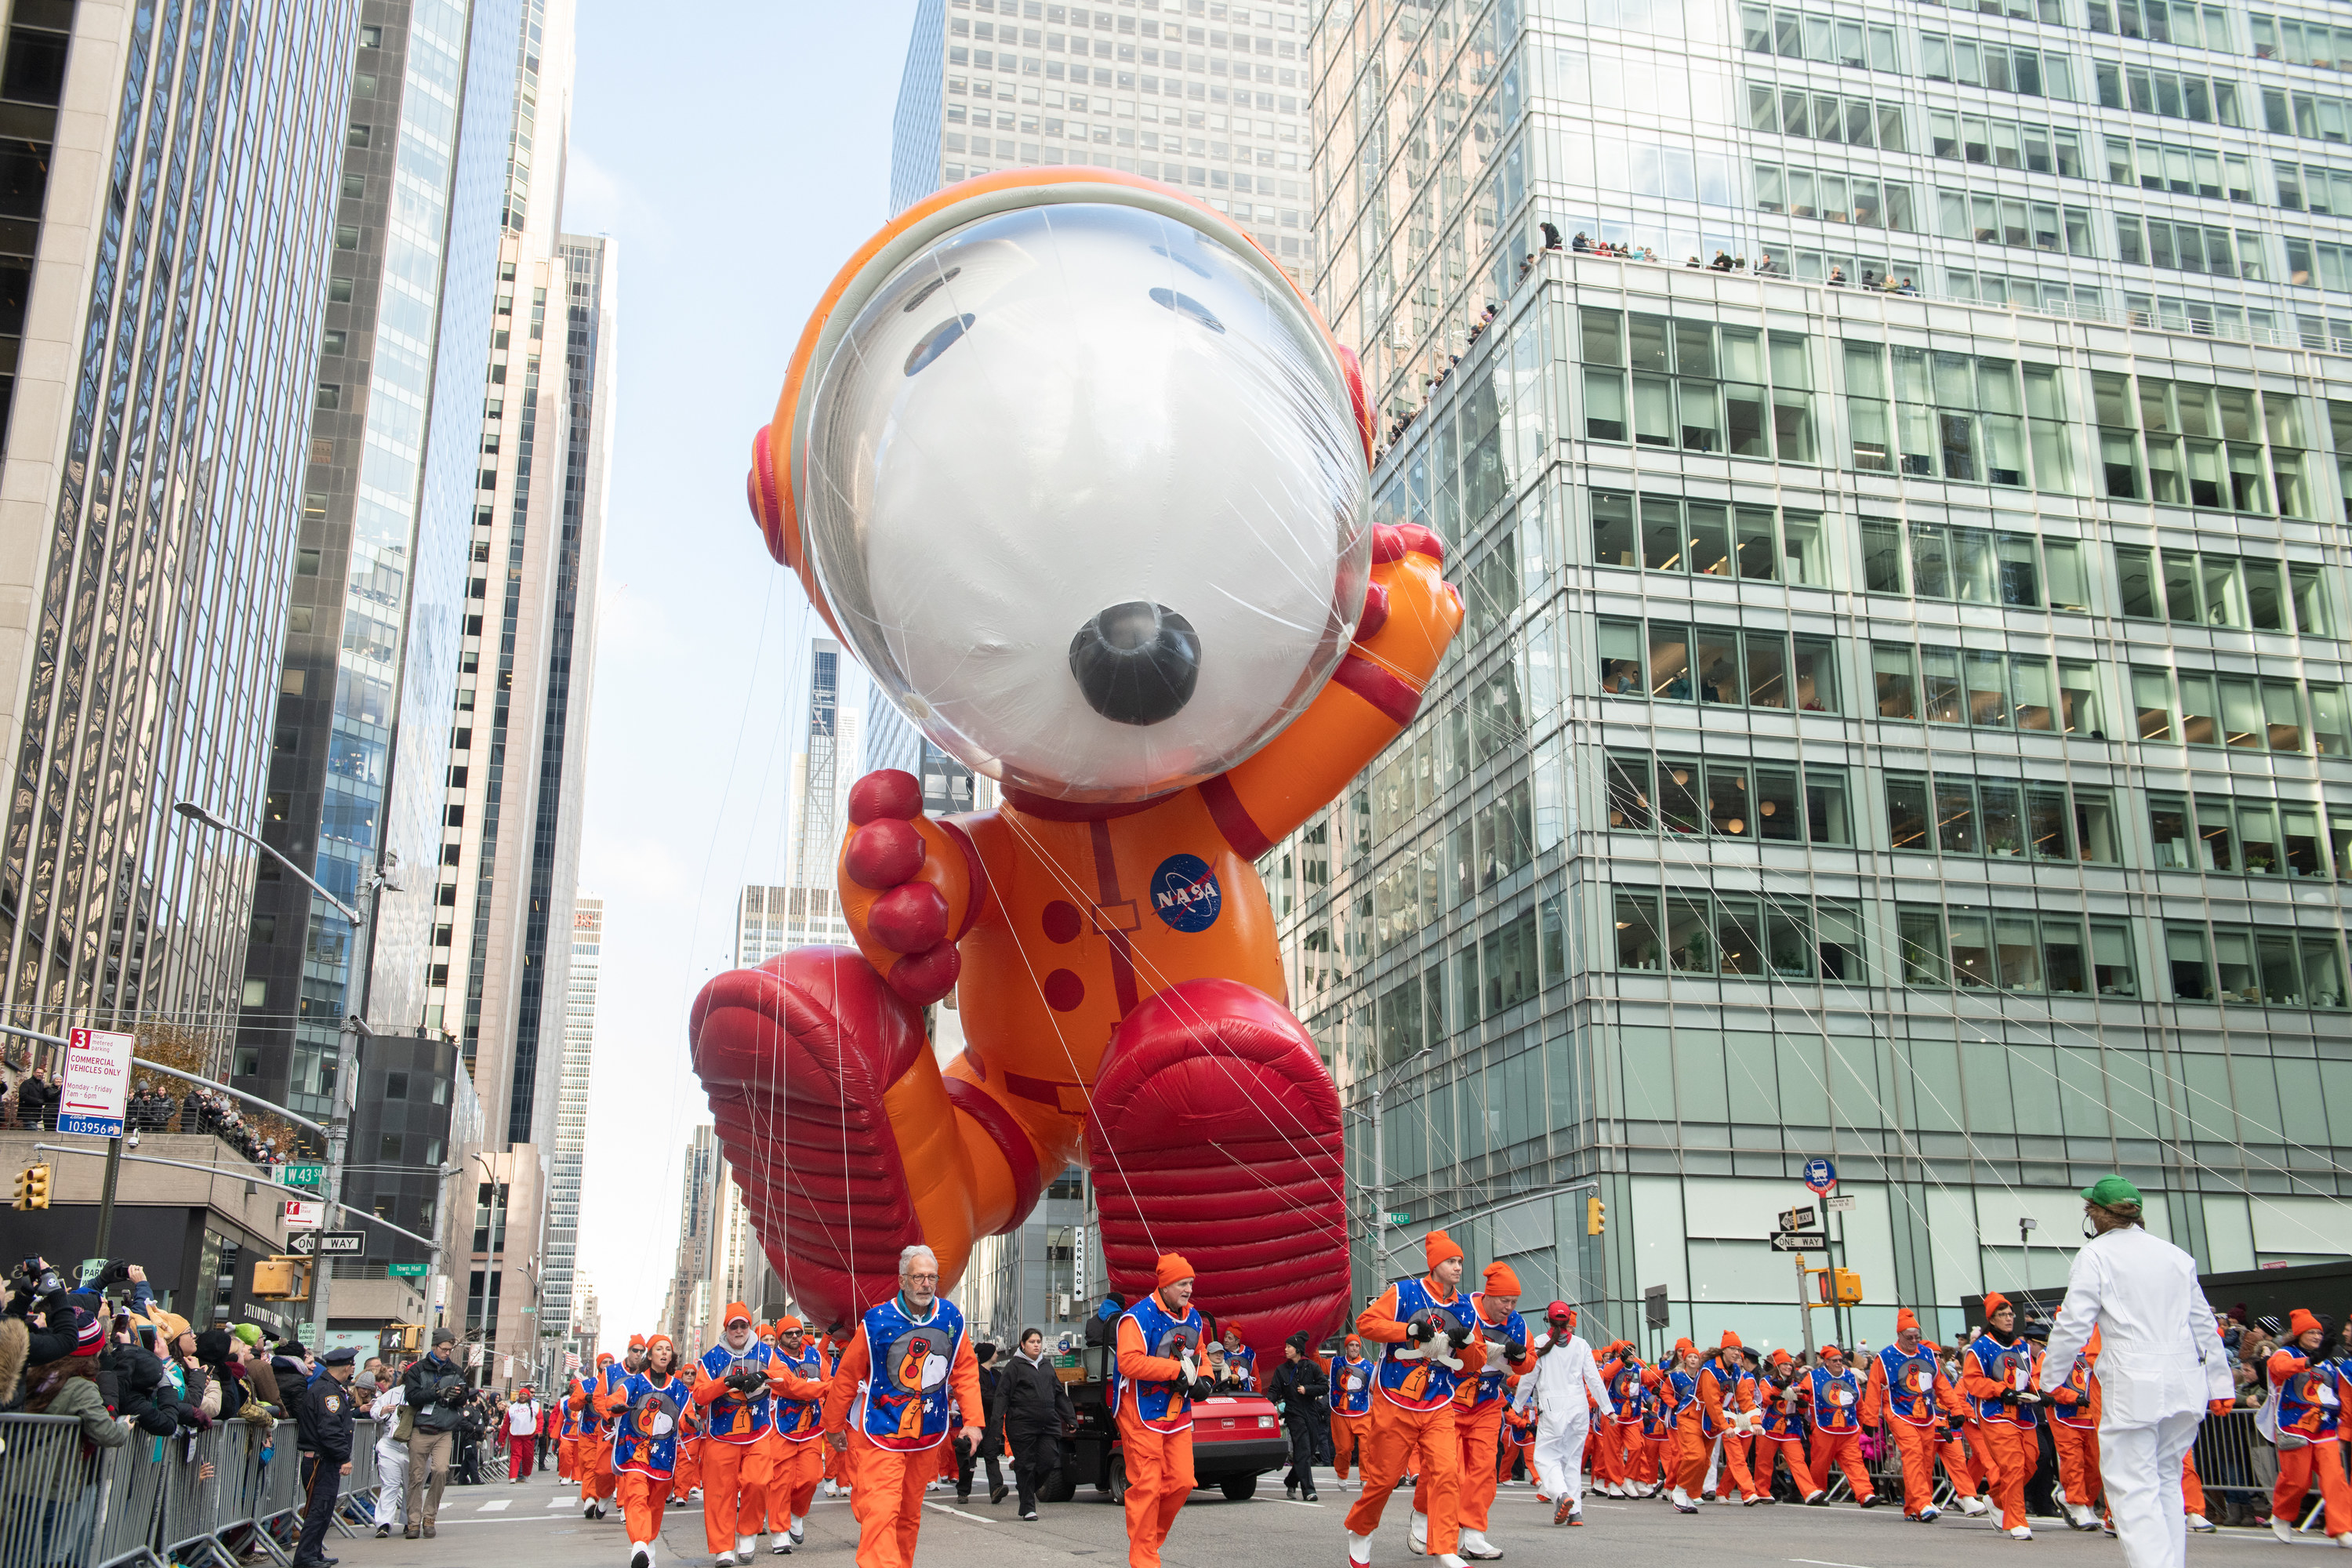 Snoopy balloon in astronaut gear